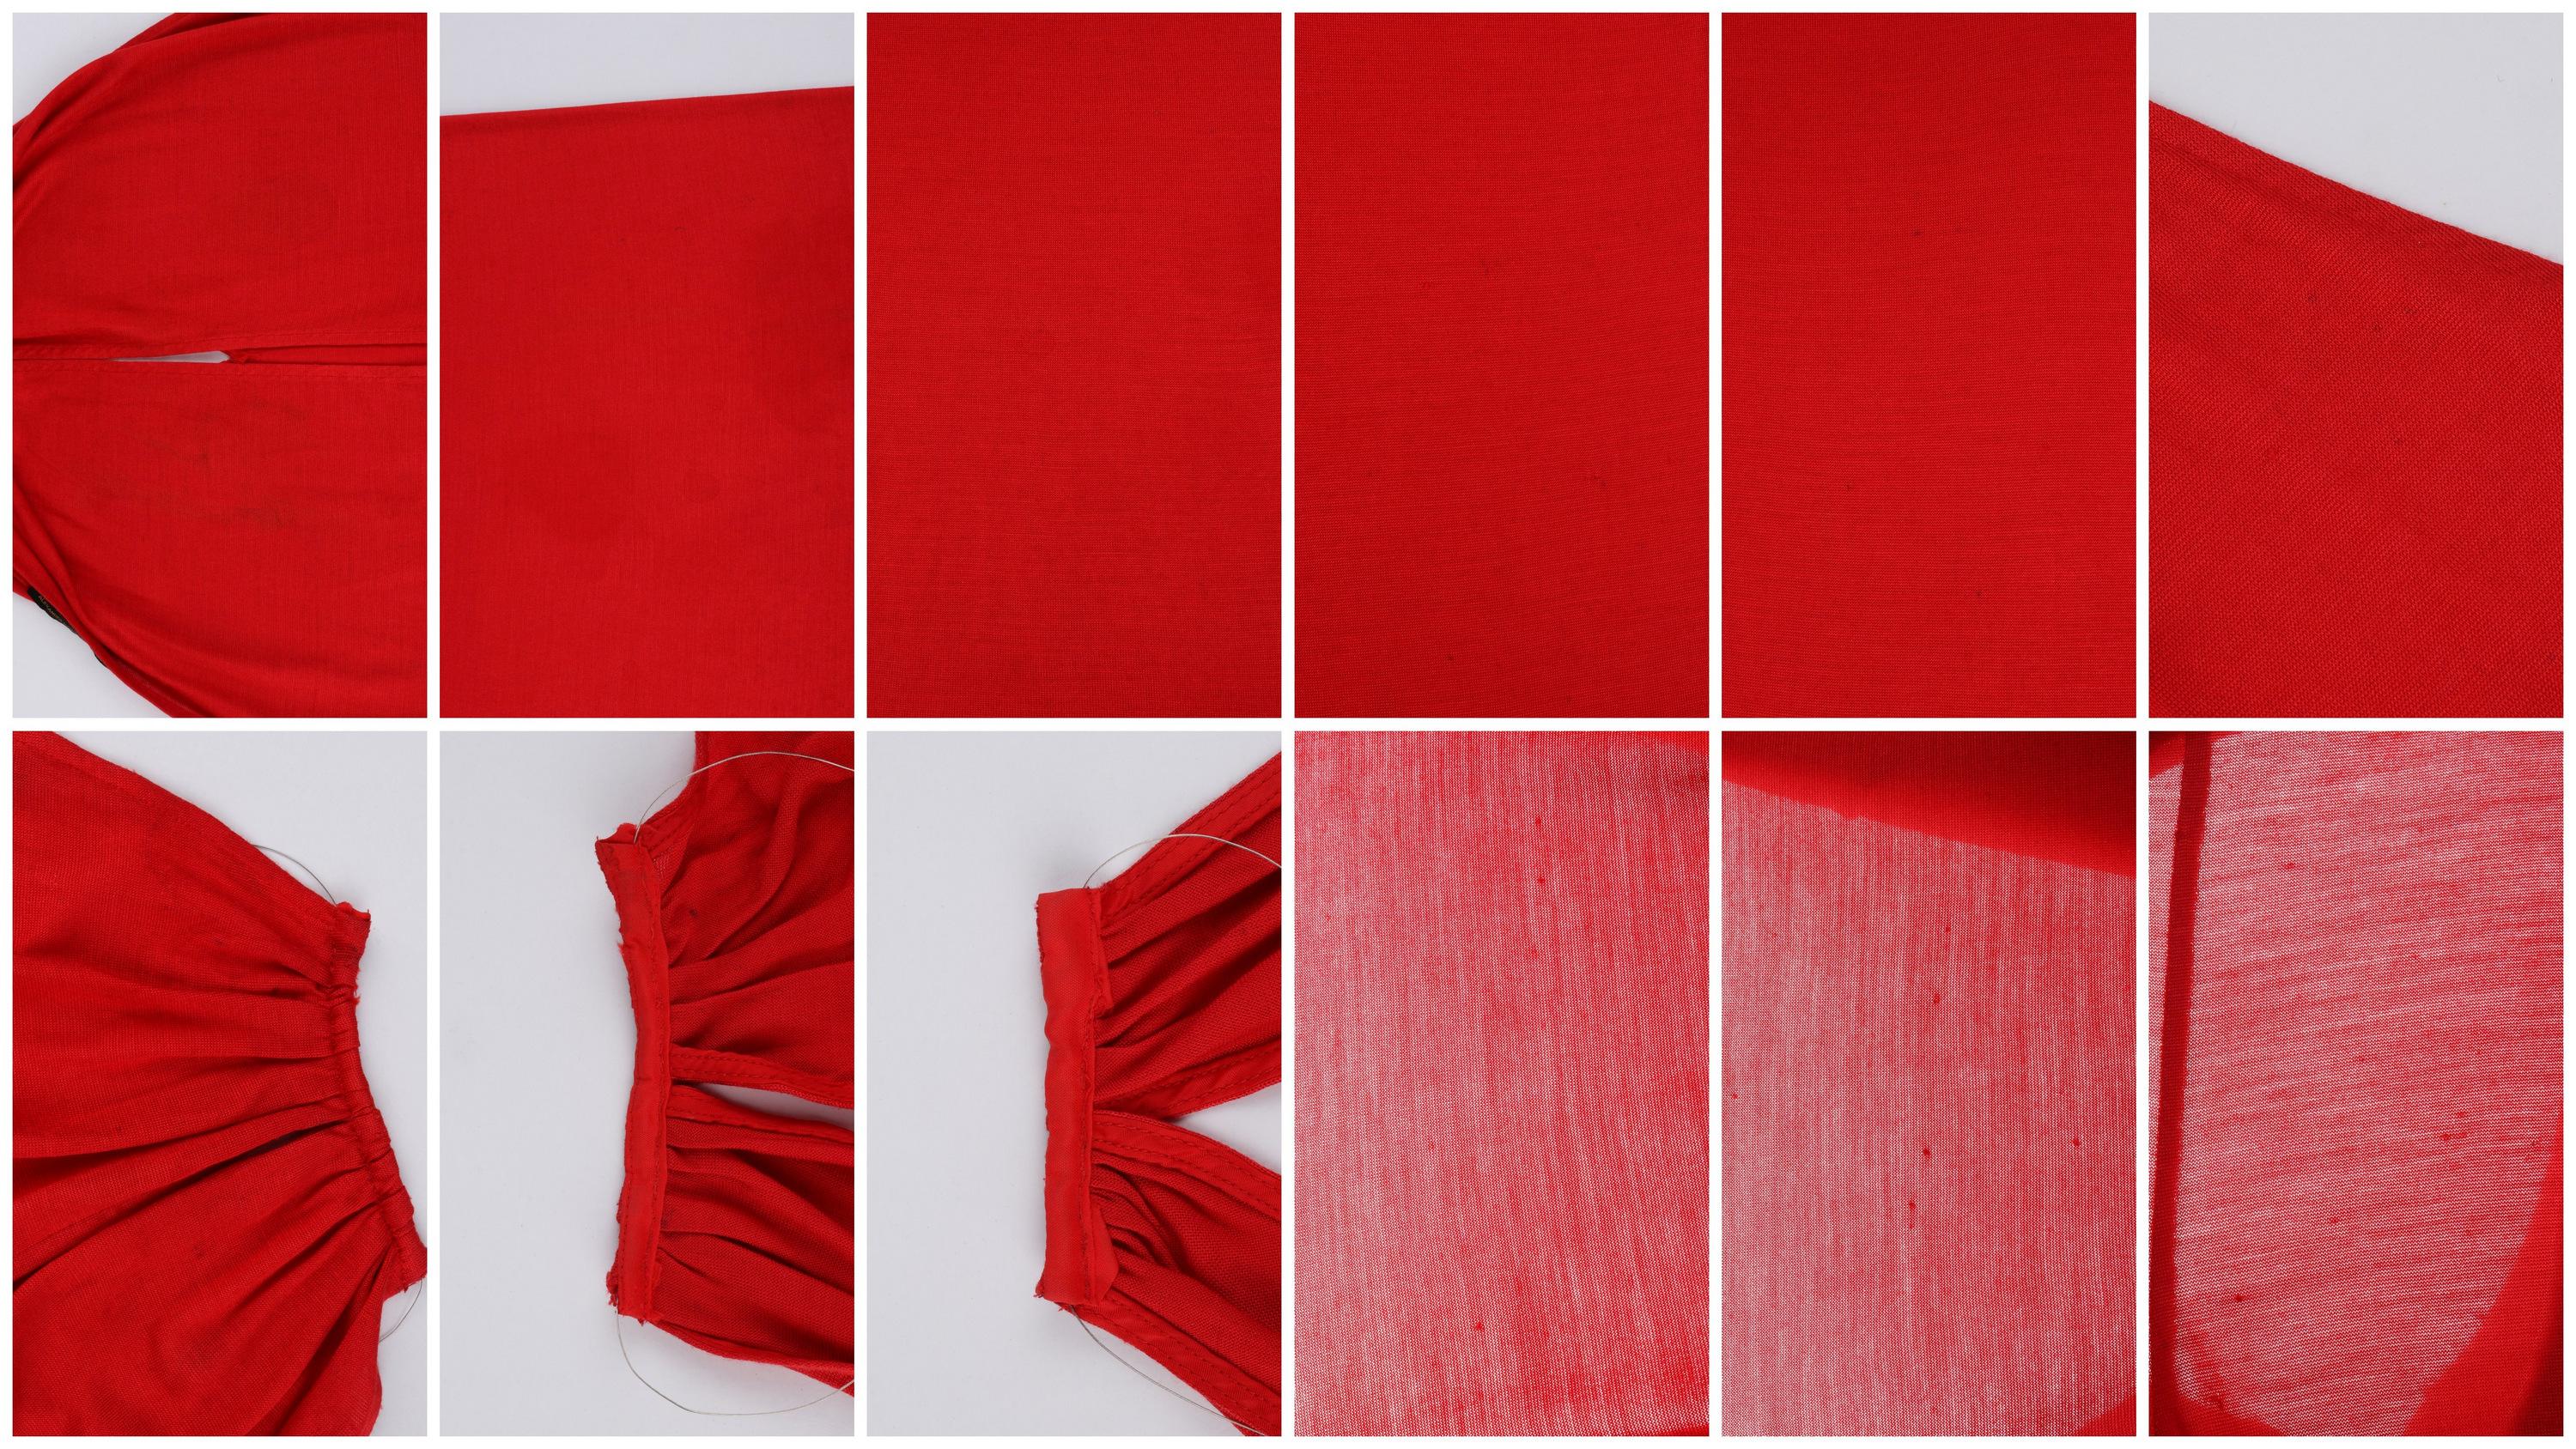 ALEXANDER McQUEEN S/S 2001 “Eye” Red Keyhole Cutout Wire Choker Halter Top Dress For Sale 5